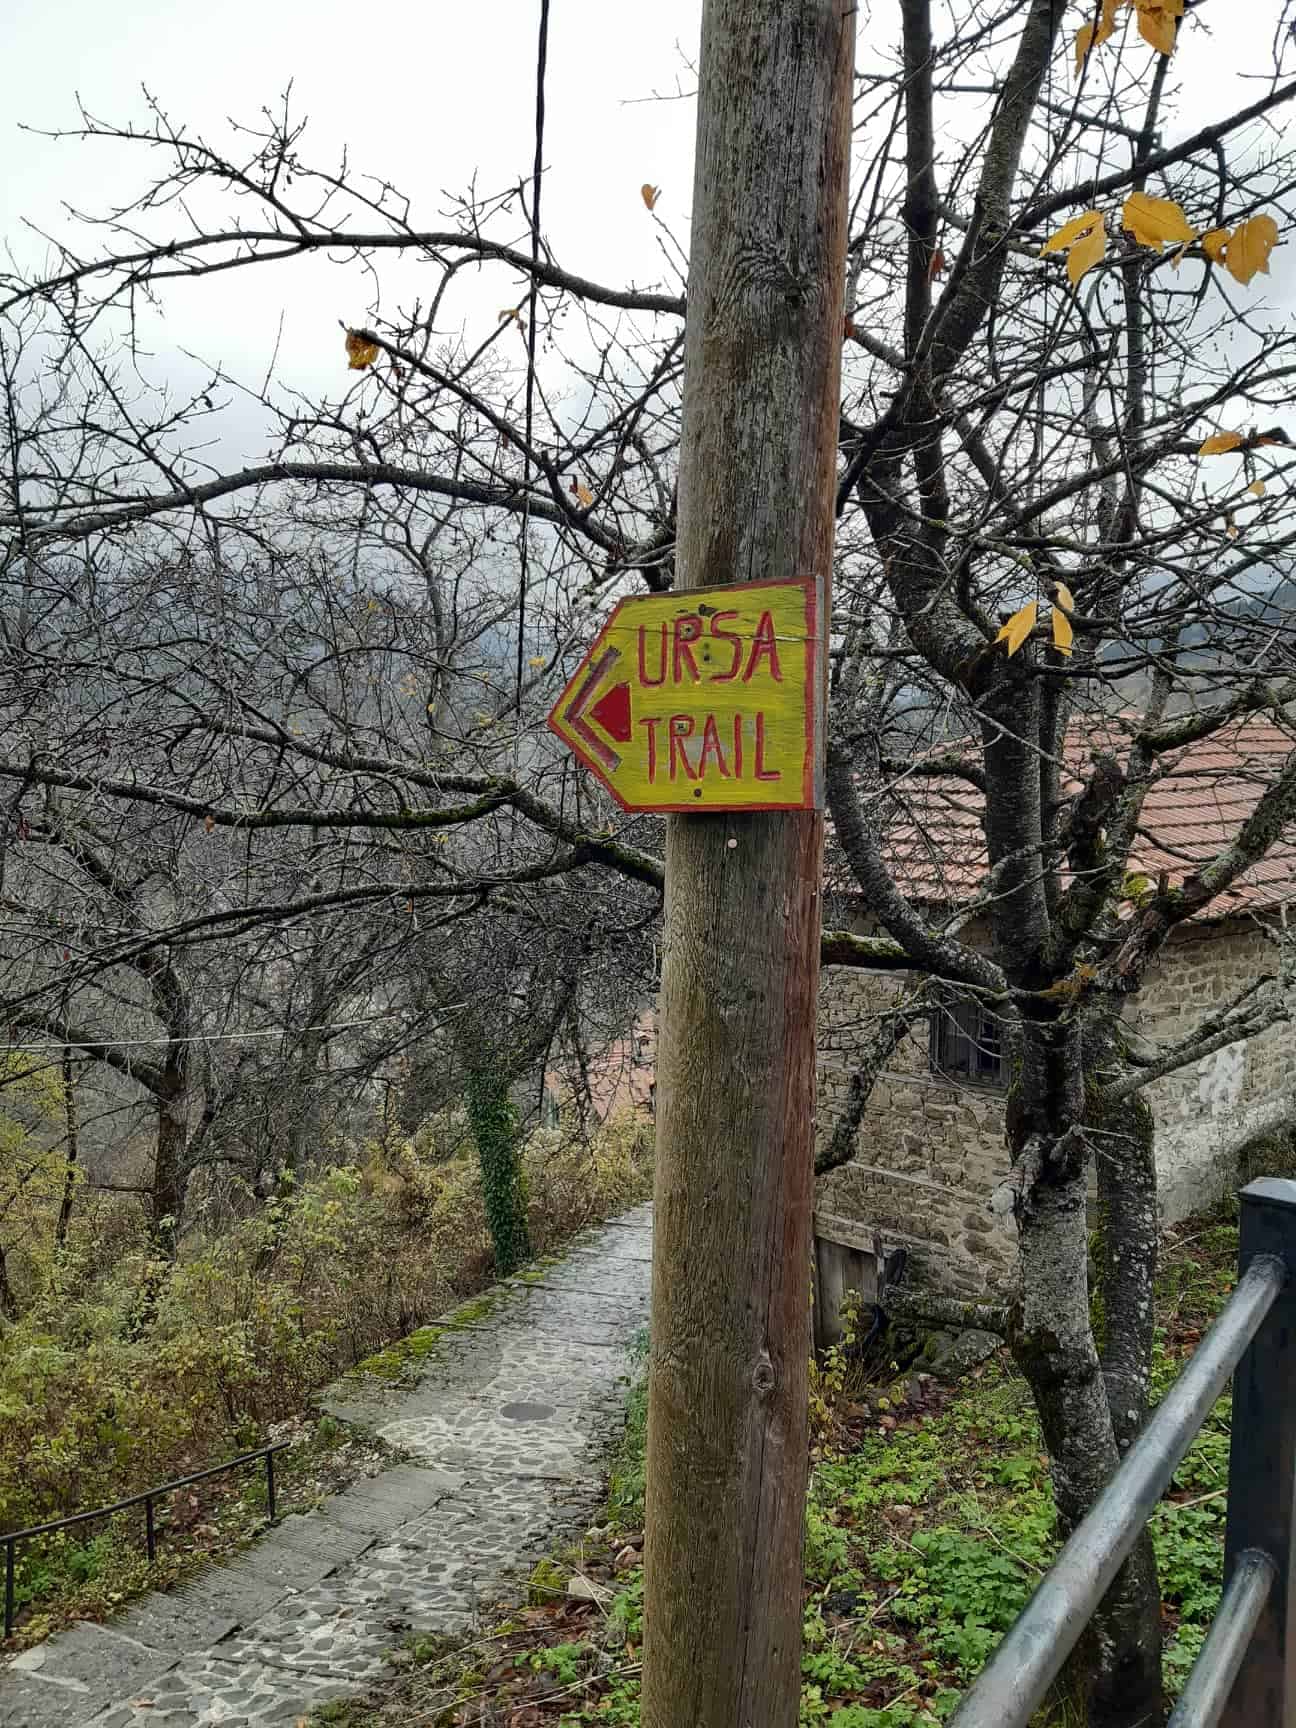 Hiking in Greece: The Ursa Trail, Metsovo